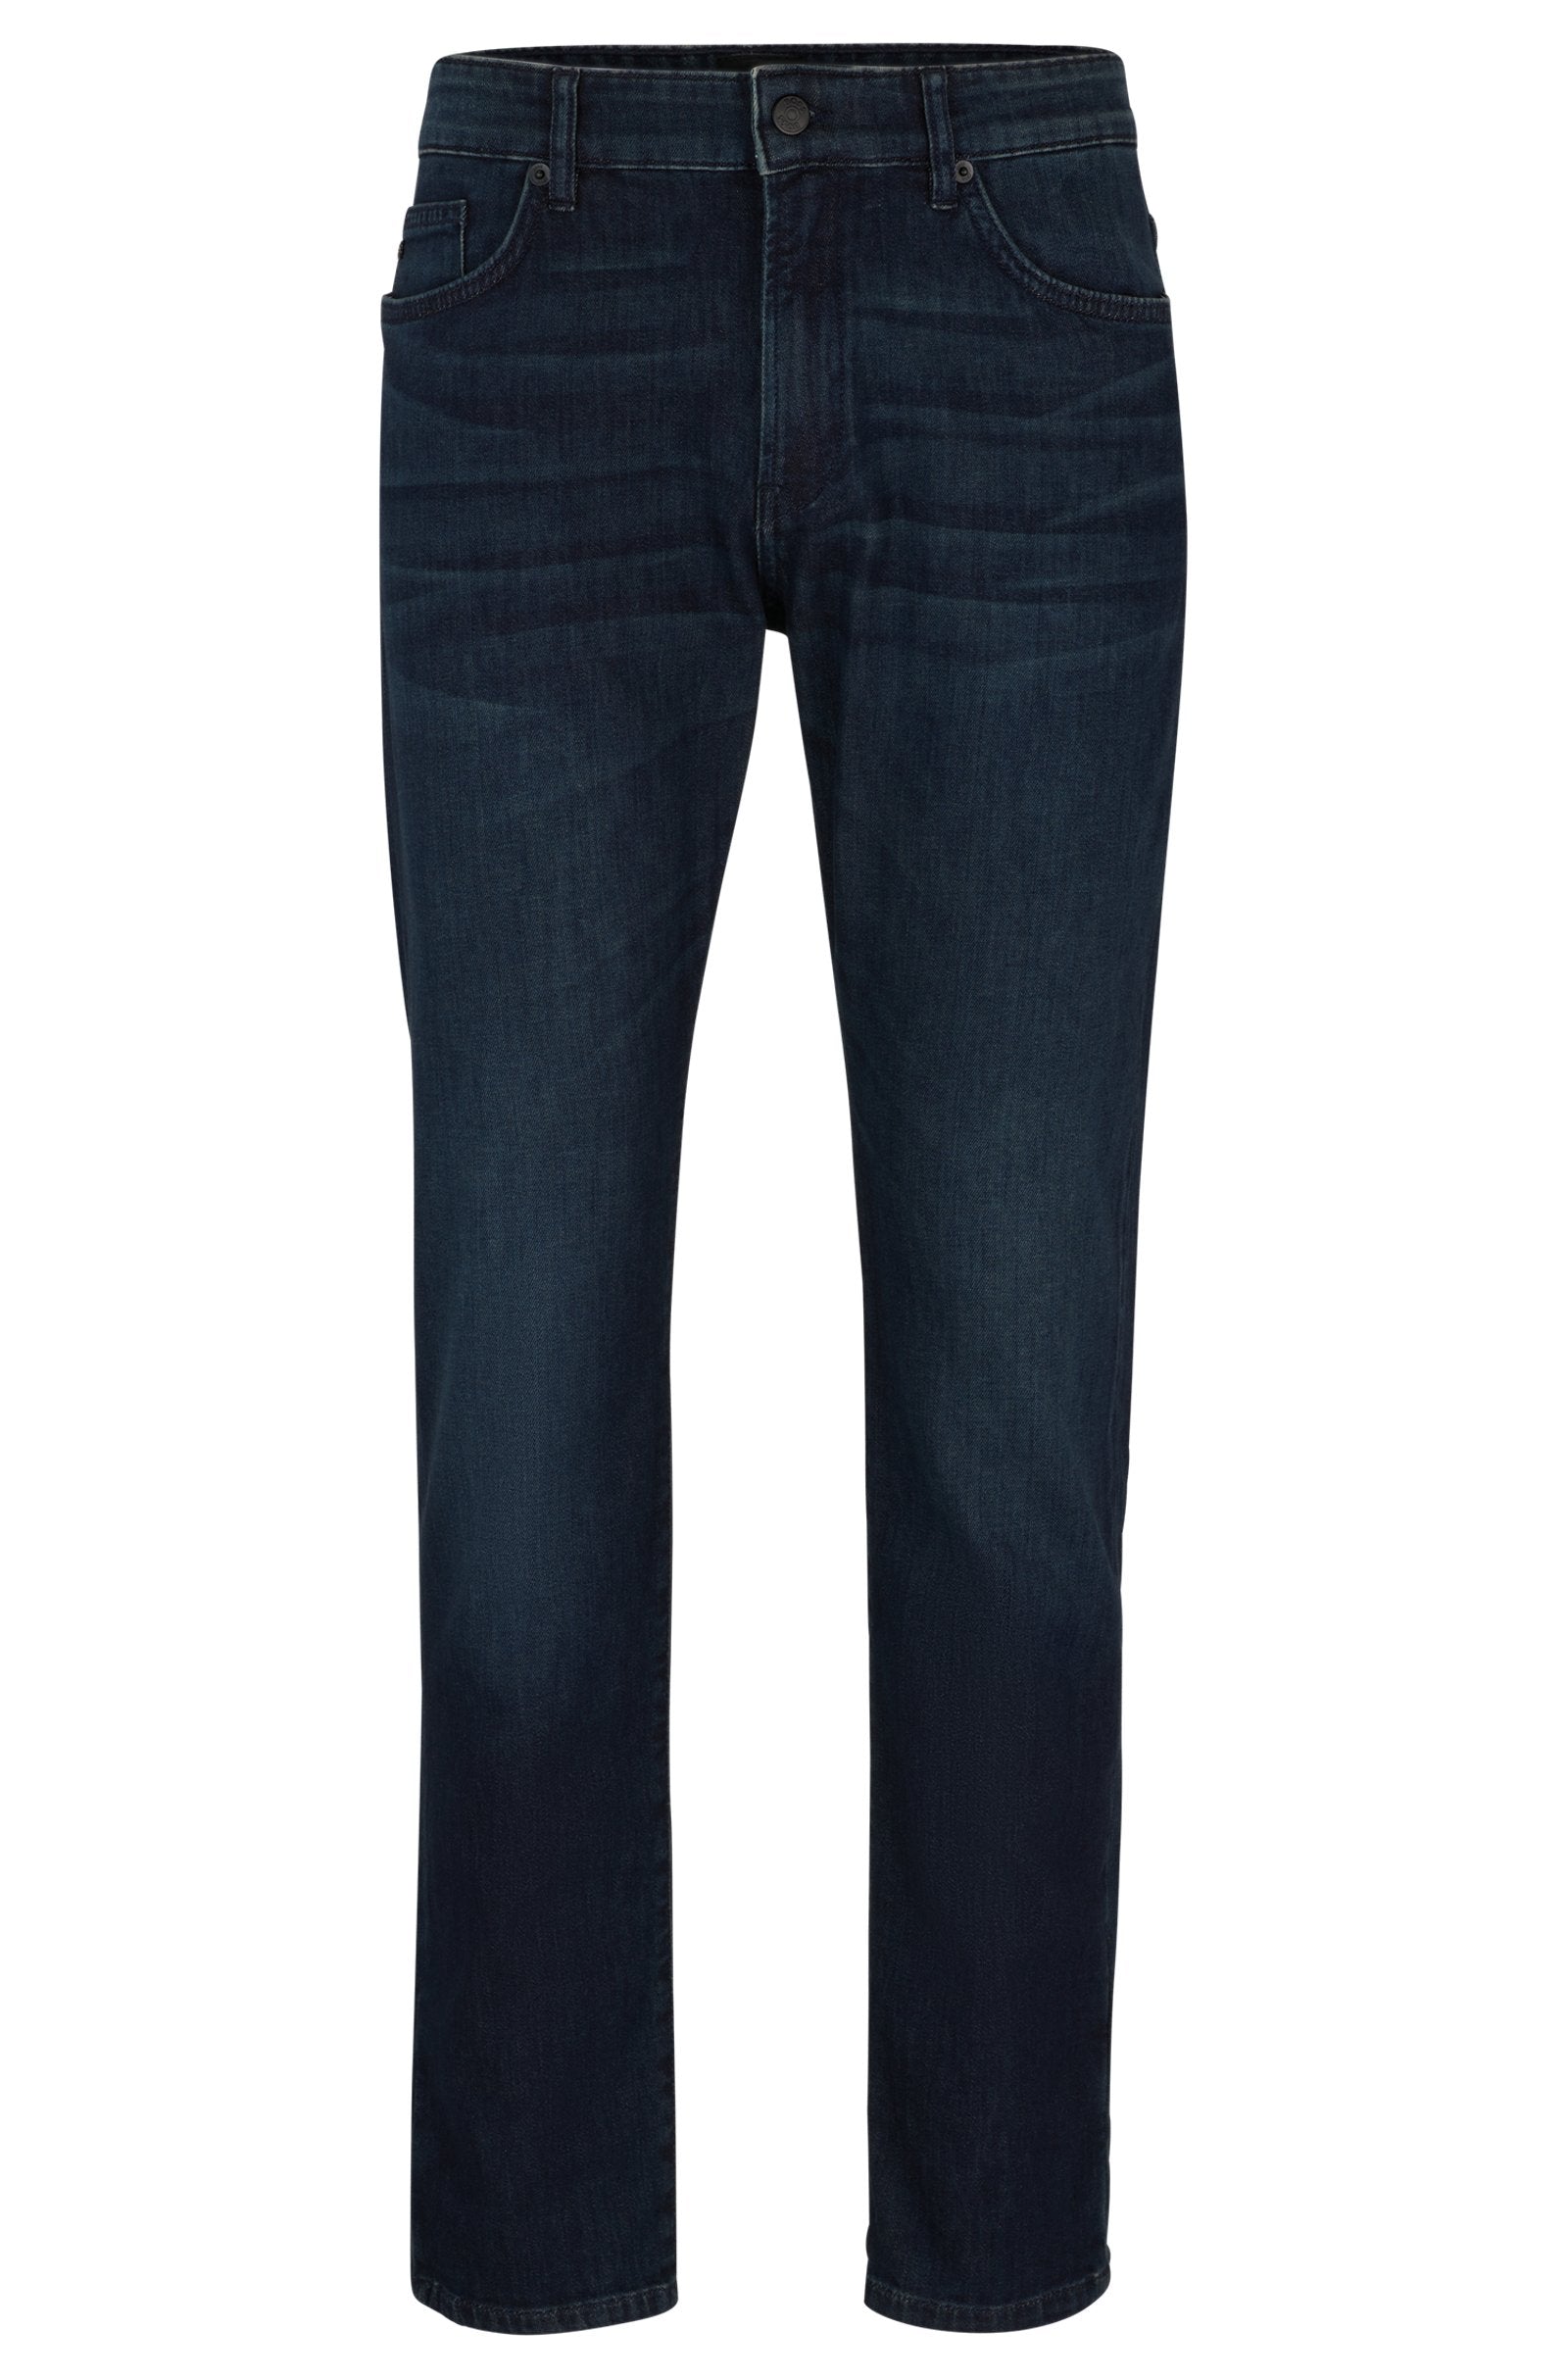 BOSS - DELAWARE3-1 Dark Navy Blue Slim Fit Jeans In Comfort Stretch Denim 50513632 412